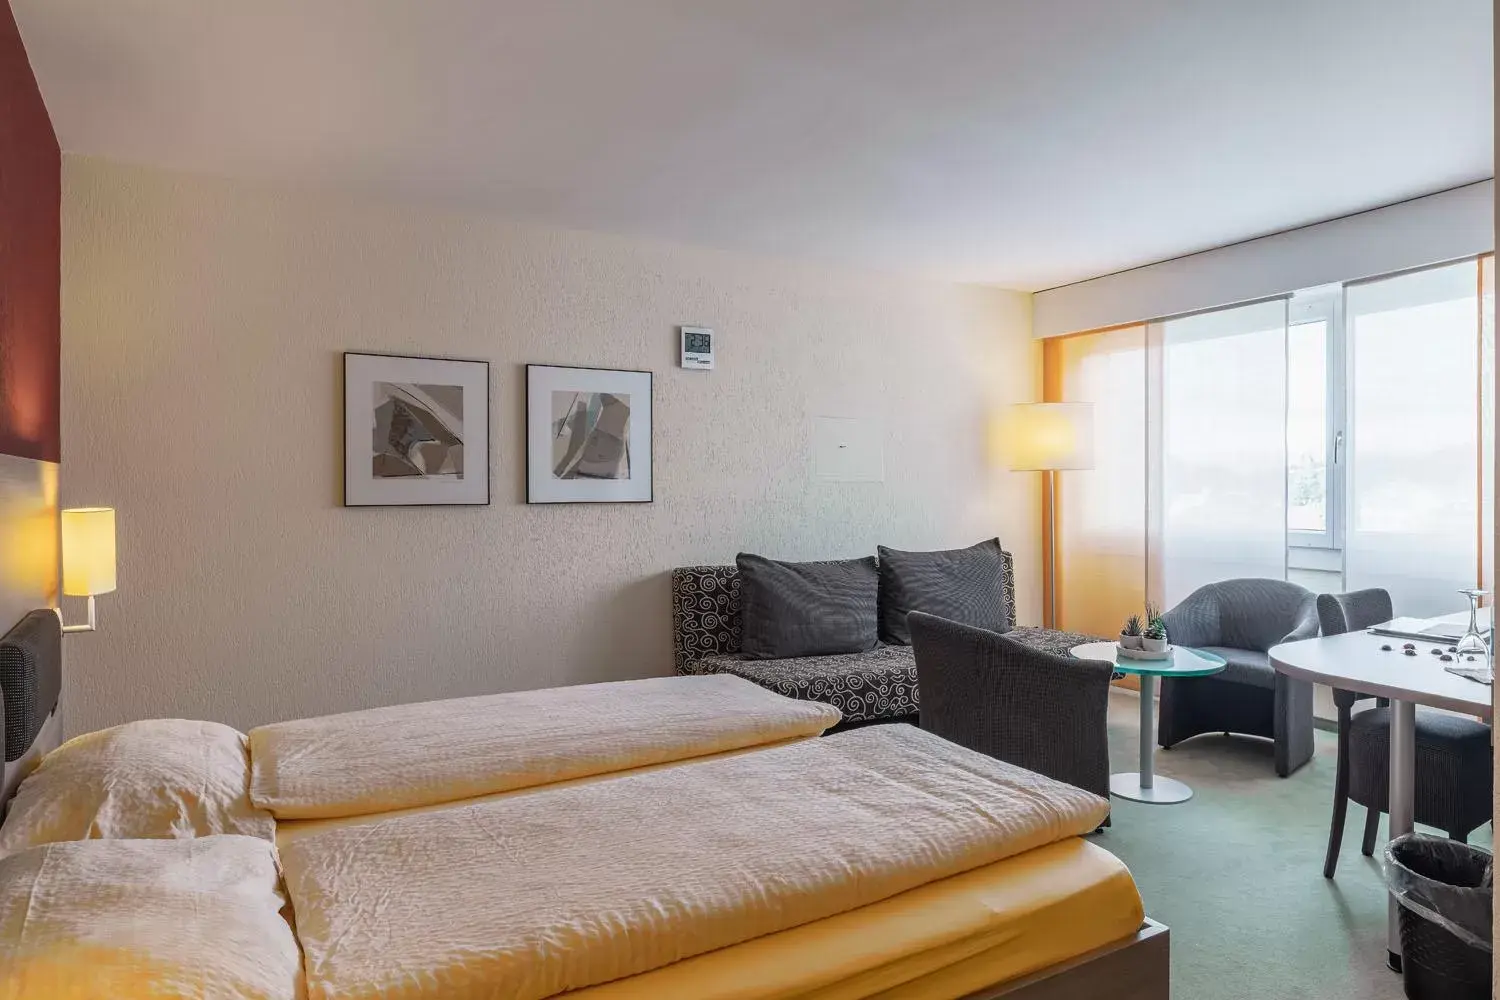 Bed, Room Photo in Hotel Drei Könige